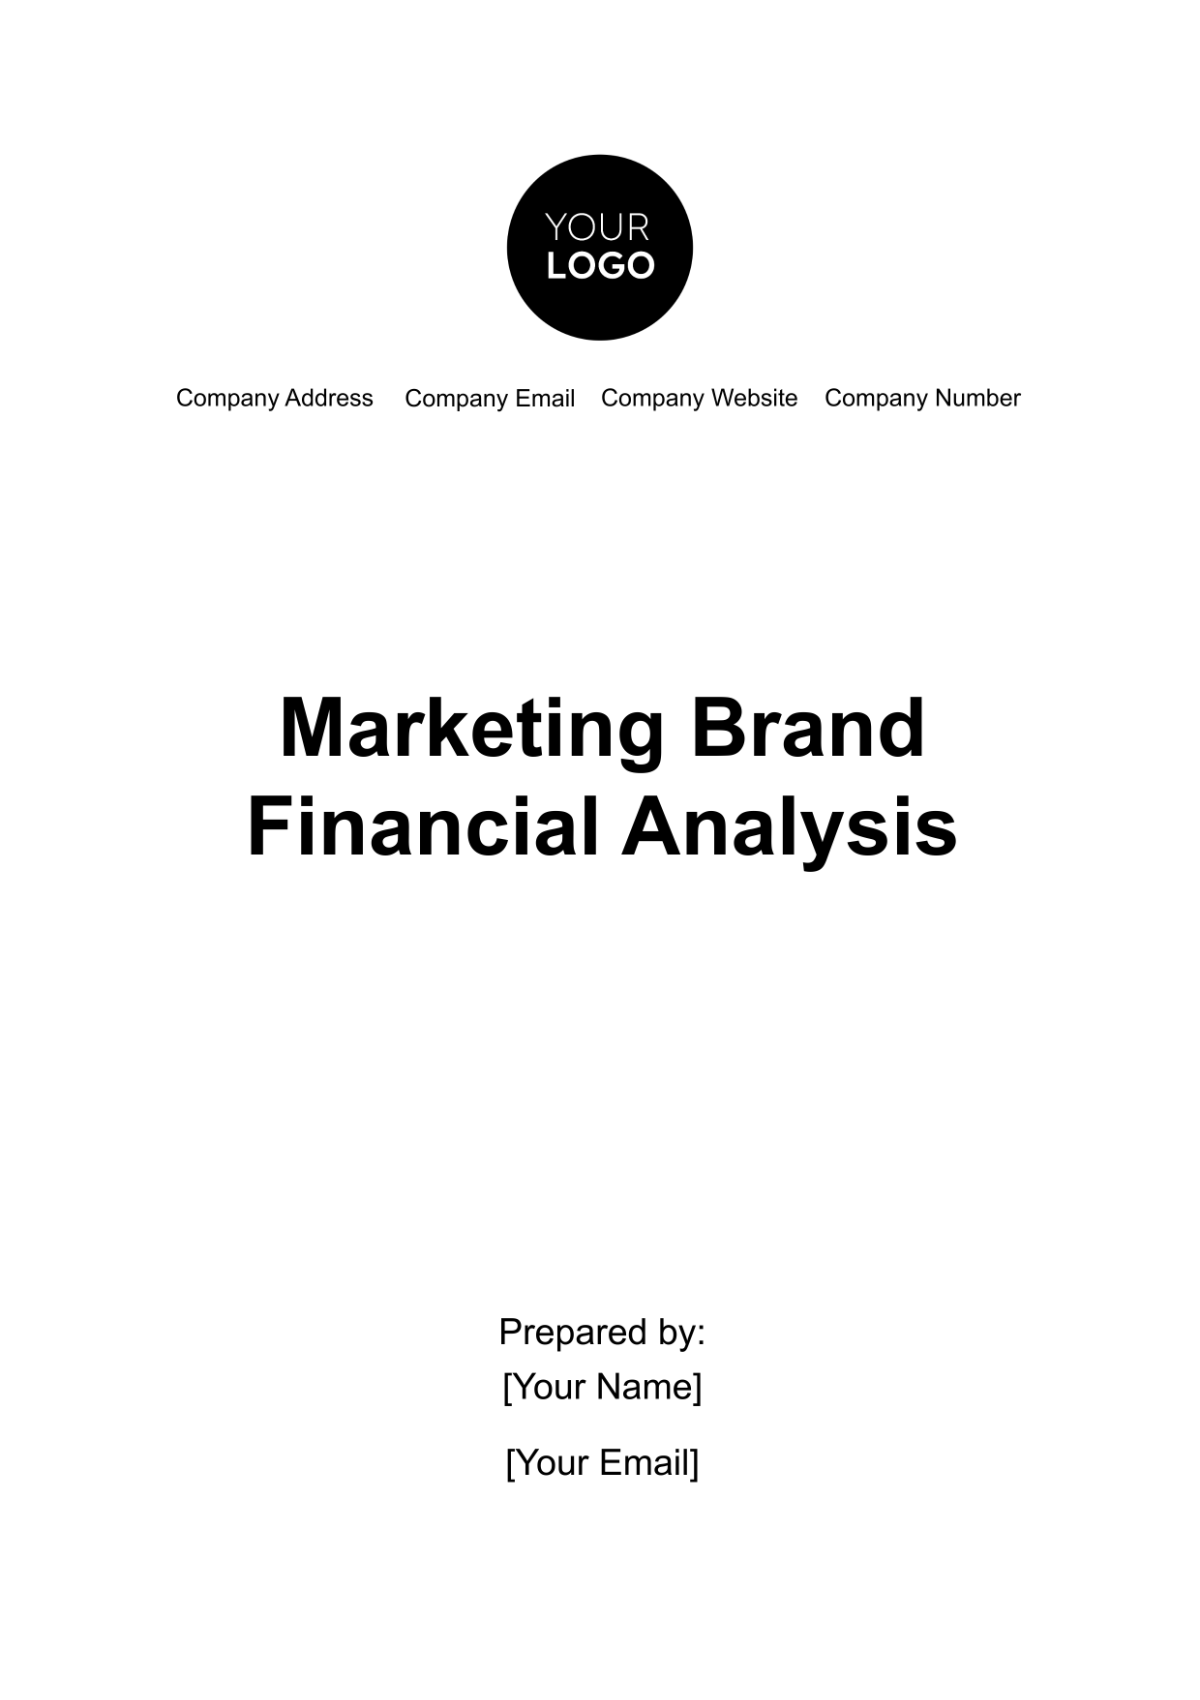 Marketing Brand Financial Analysis Template